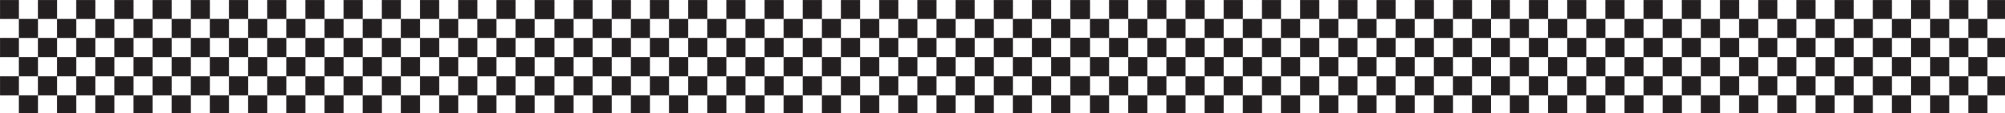 checker pattern (black and white)